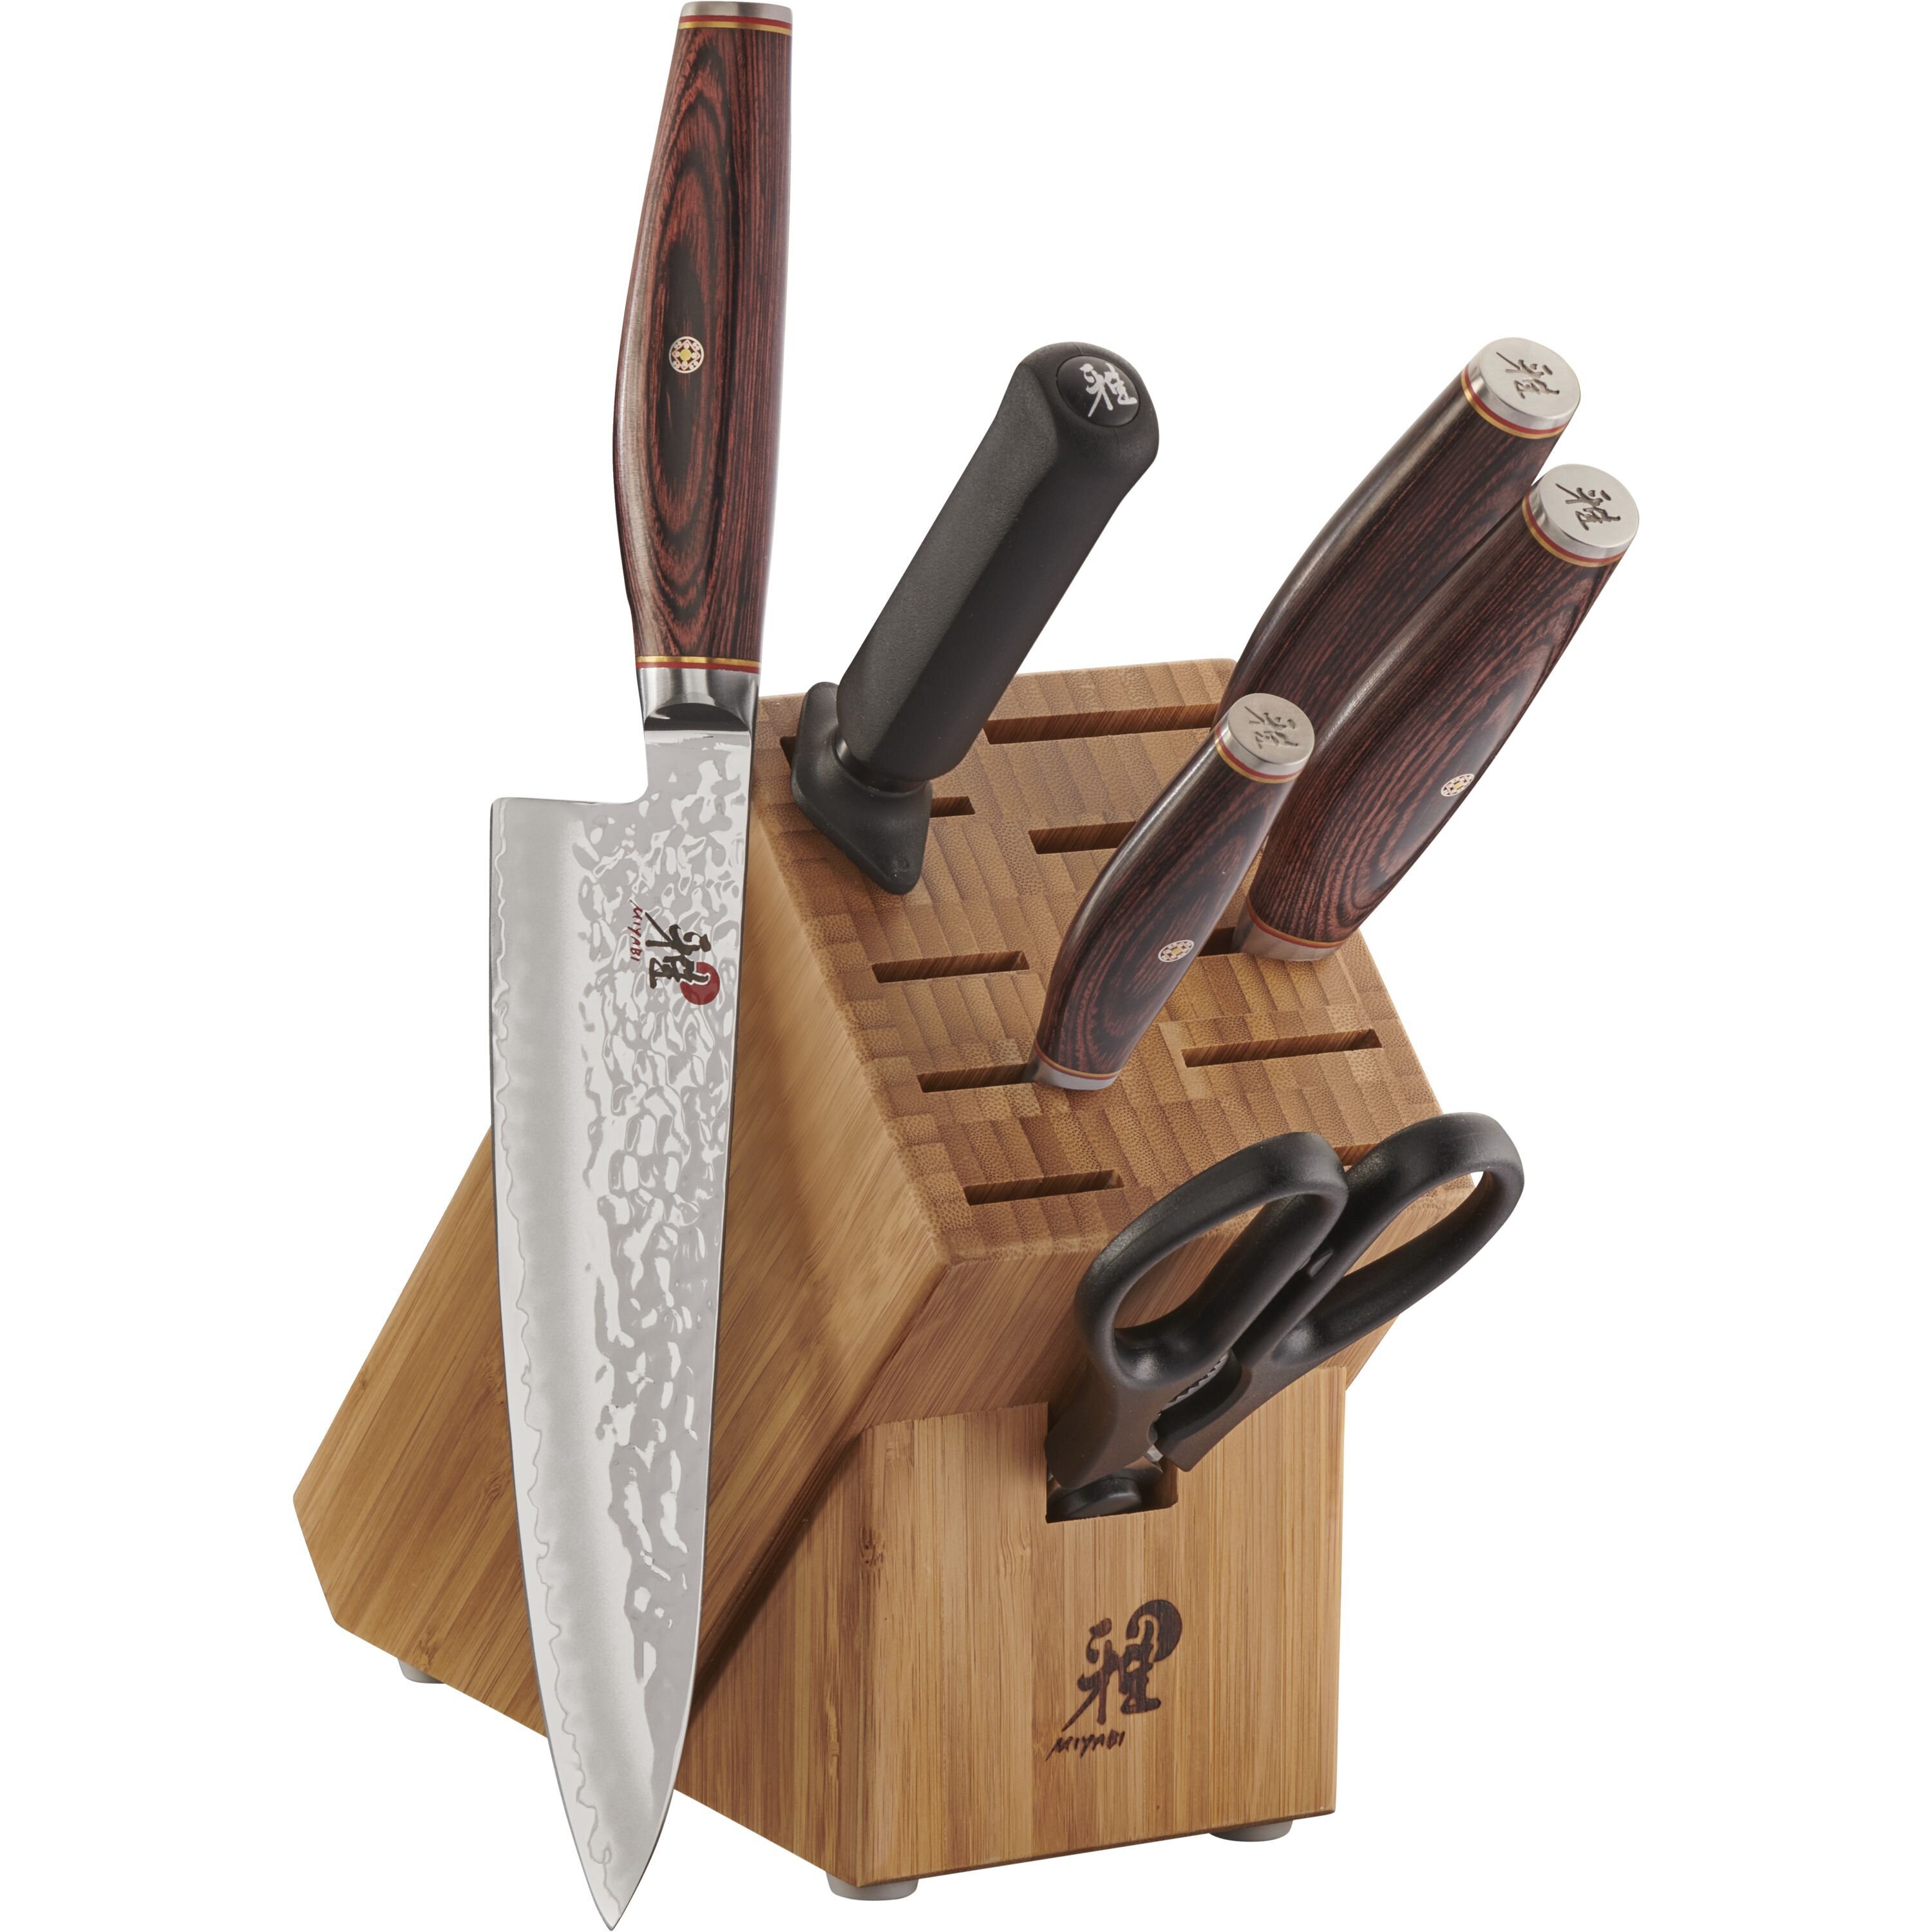 Global Classic 5-Piece Masuta Knife Wood Block Set